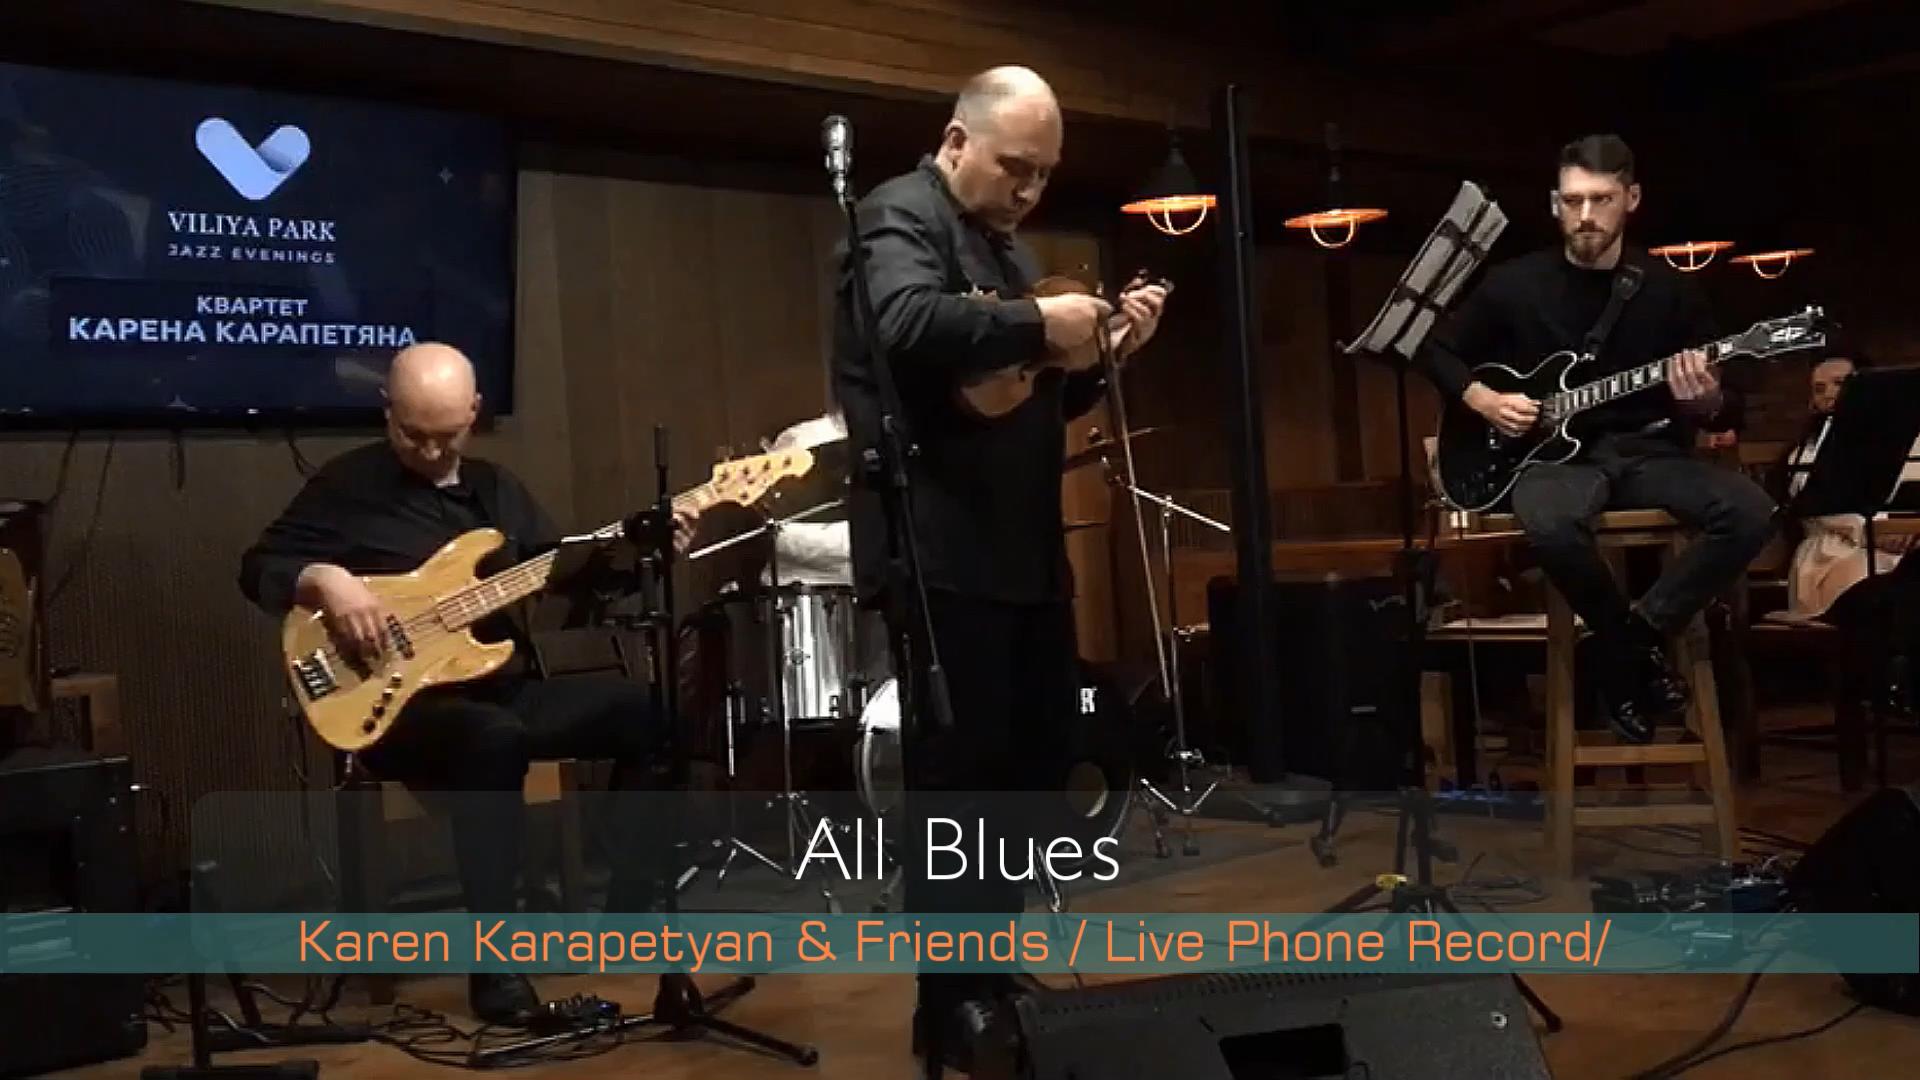 Karen Karapetyan & Friends In Jam Session "All Blues"